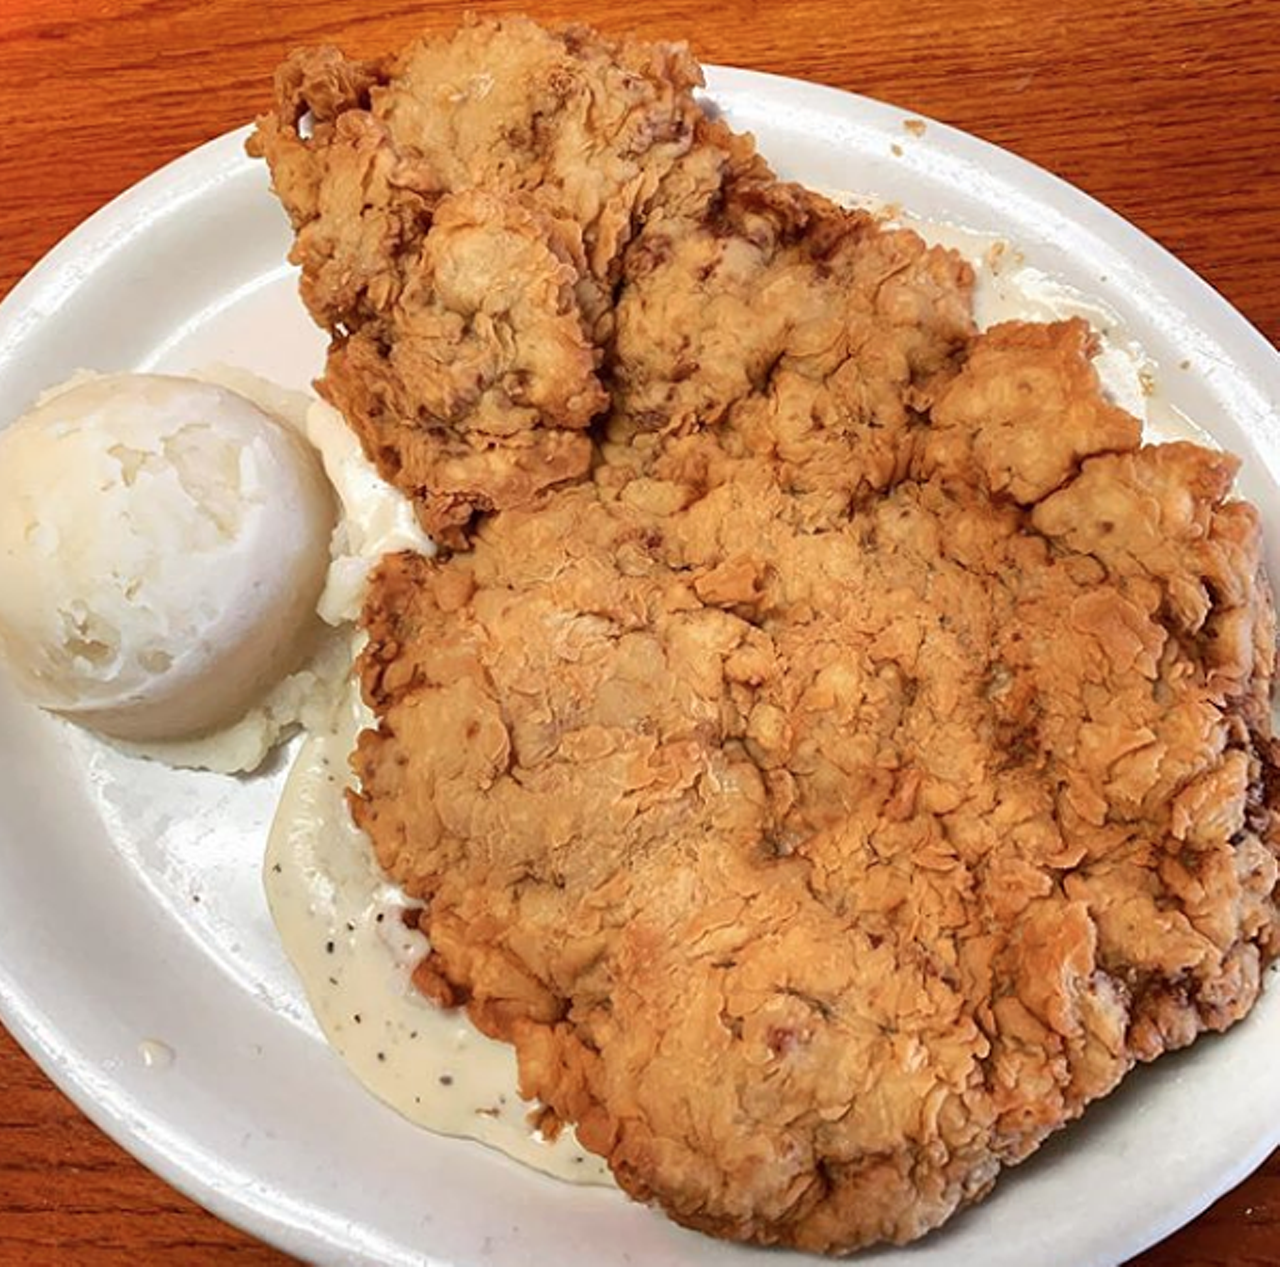 Best Chicken Fried Steak
De Wese’s Tip Top Cafe, 2814 Fredericksburg Road, (210) 732-0191, facebook.com/tiptopcafesanantonio
Photo via Instagram / andrew_amiel